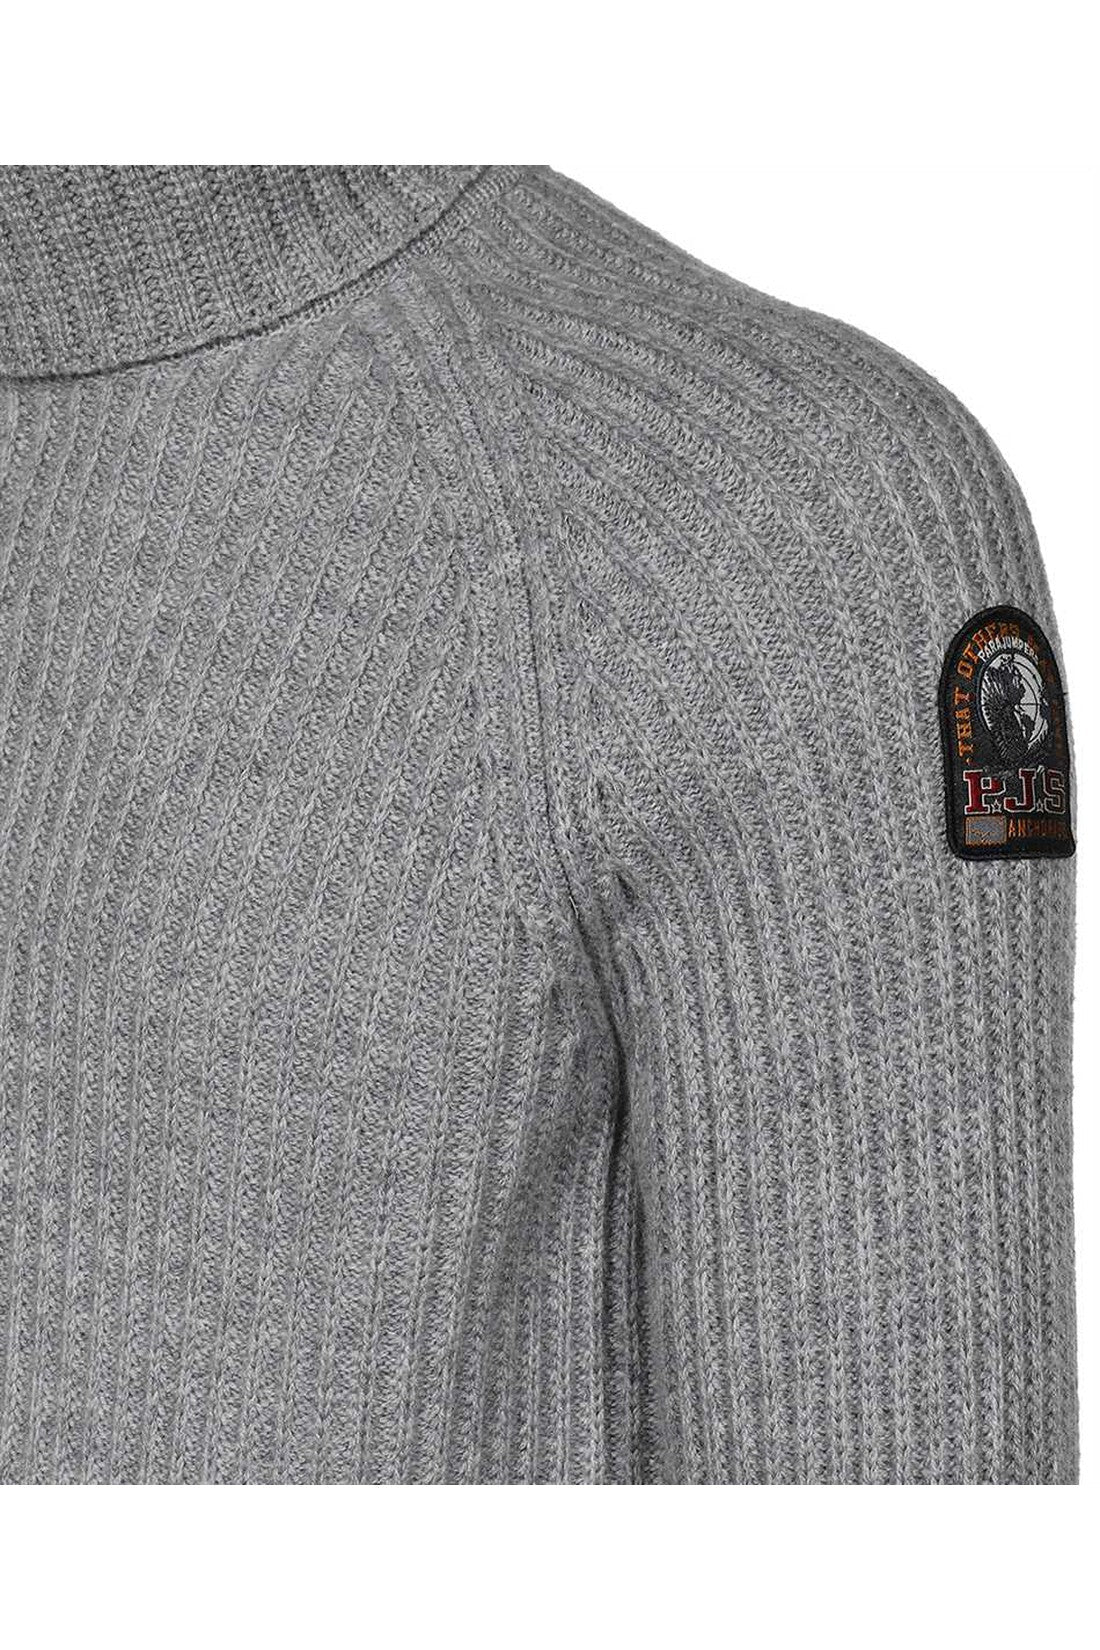 Wool turtleneck sweater-Parajumpers-OUTLET-SALE-ARCHIVIST